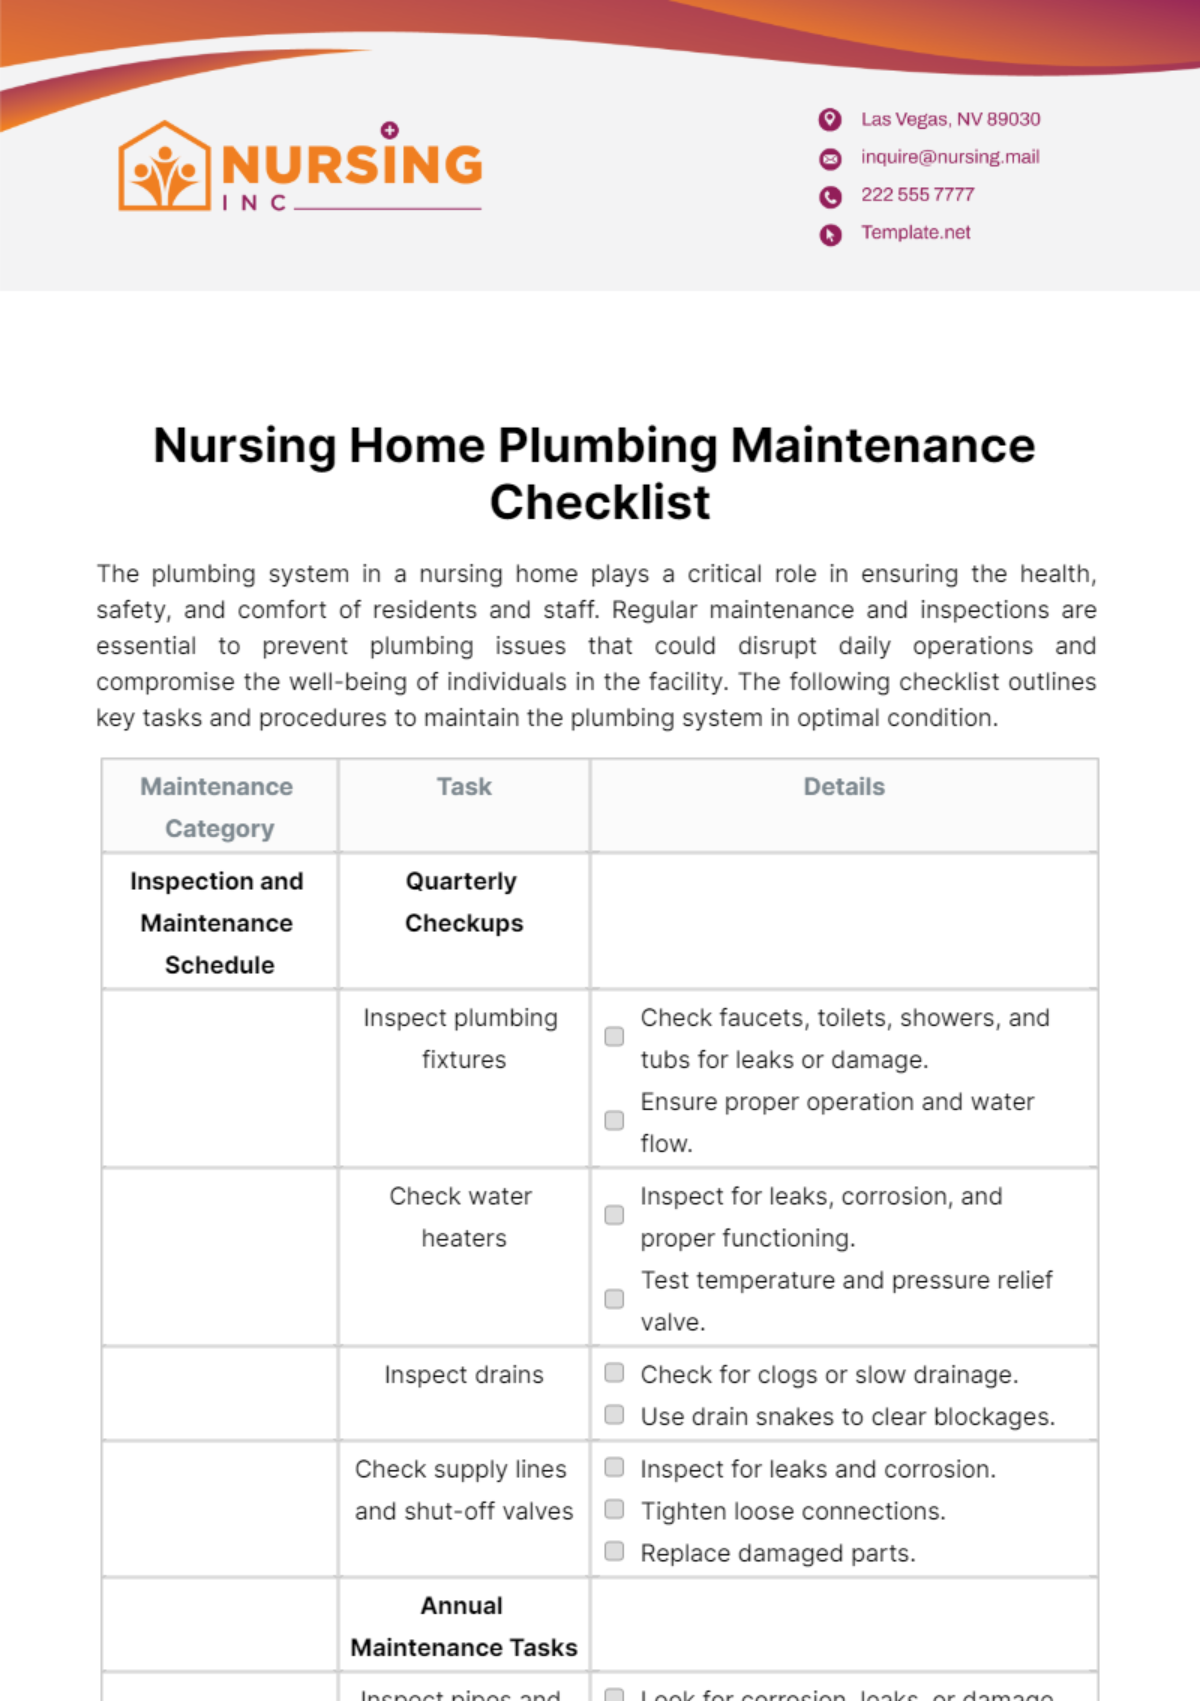 Nursing Home Plumbing Maintenance Checklist Template